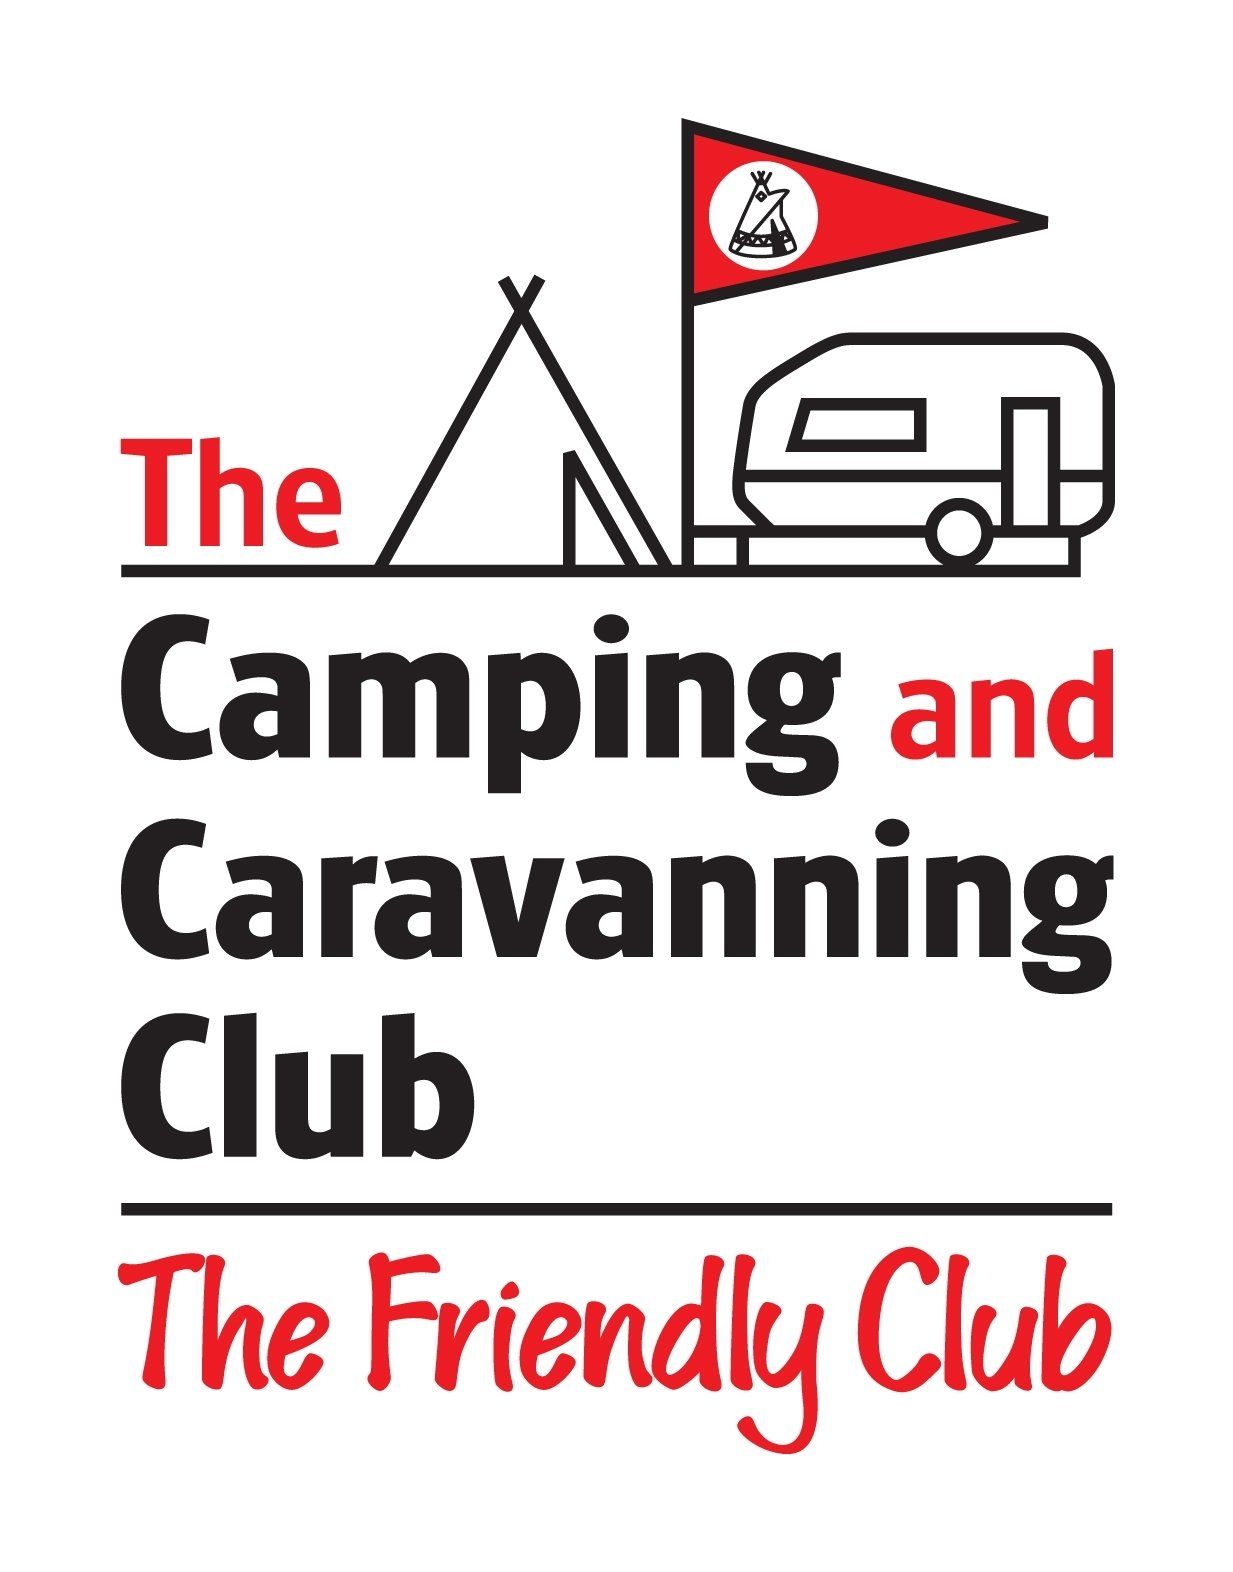 Caravan club logo